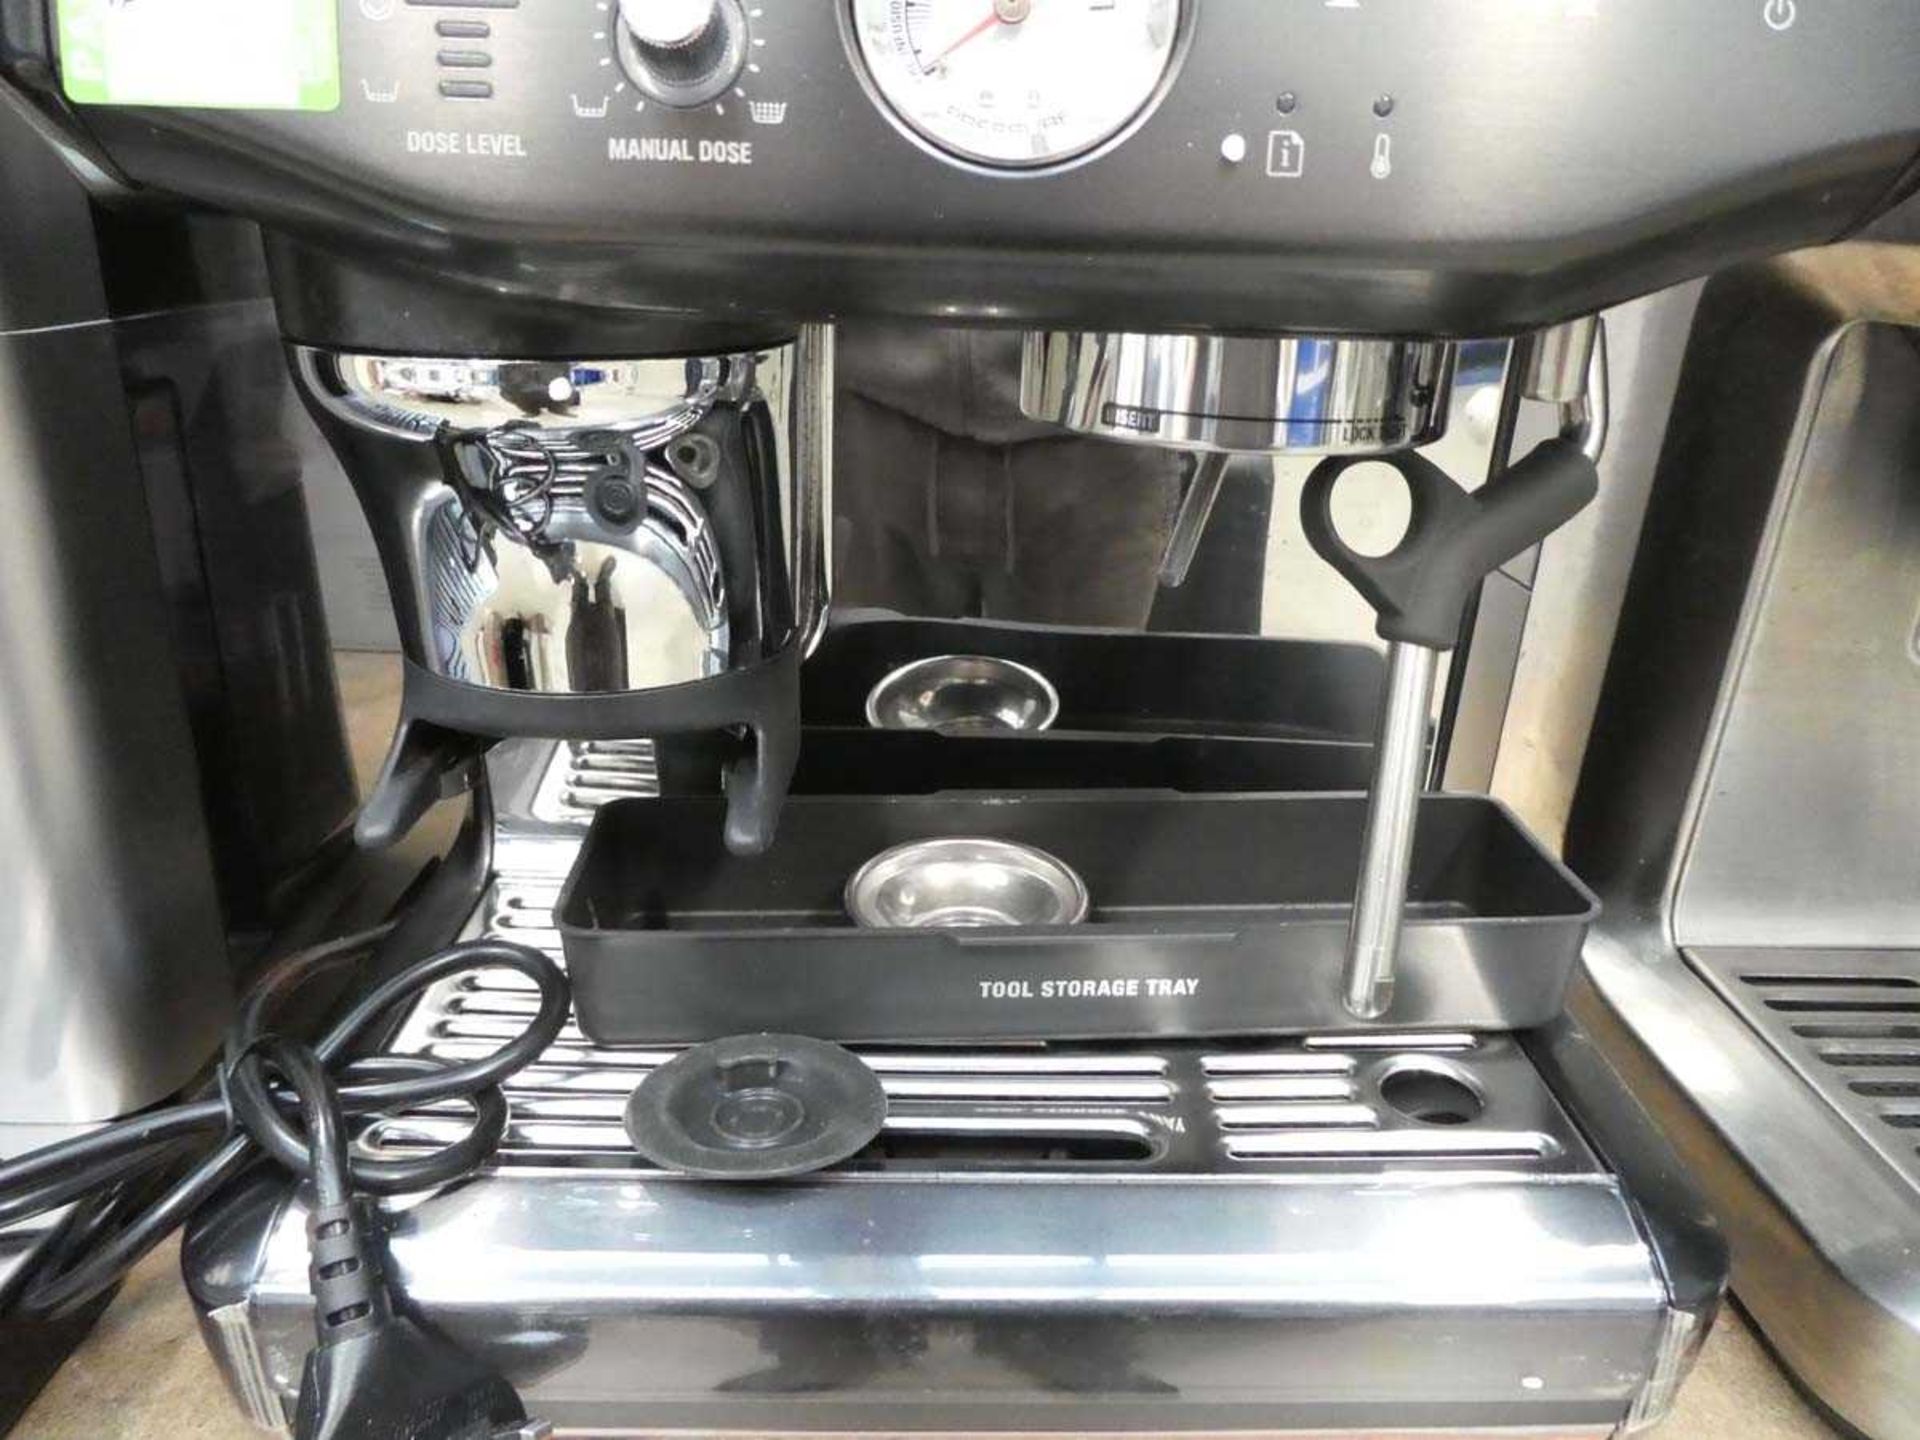 +VAT Unboxed Sage Barista Express Impress coffee machine - Image 2 of 2